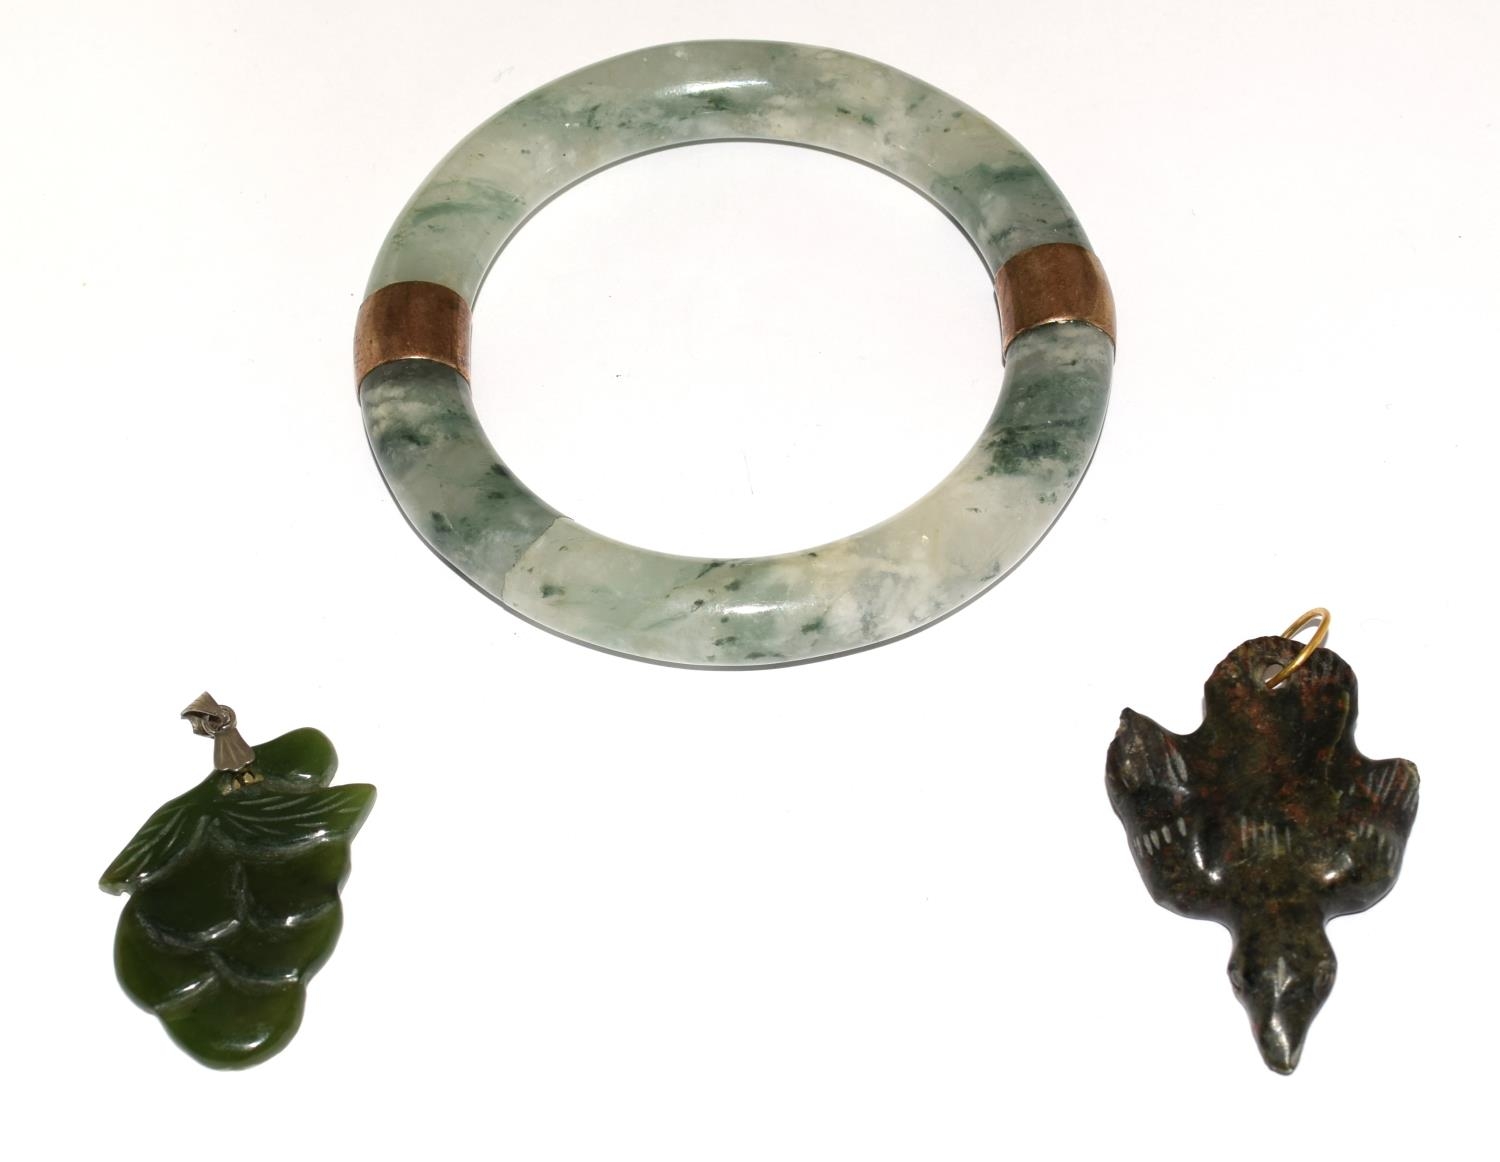 3 items of Oriental Jade jewellery